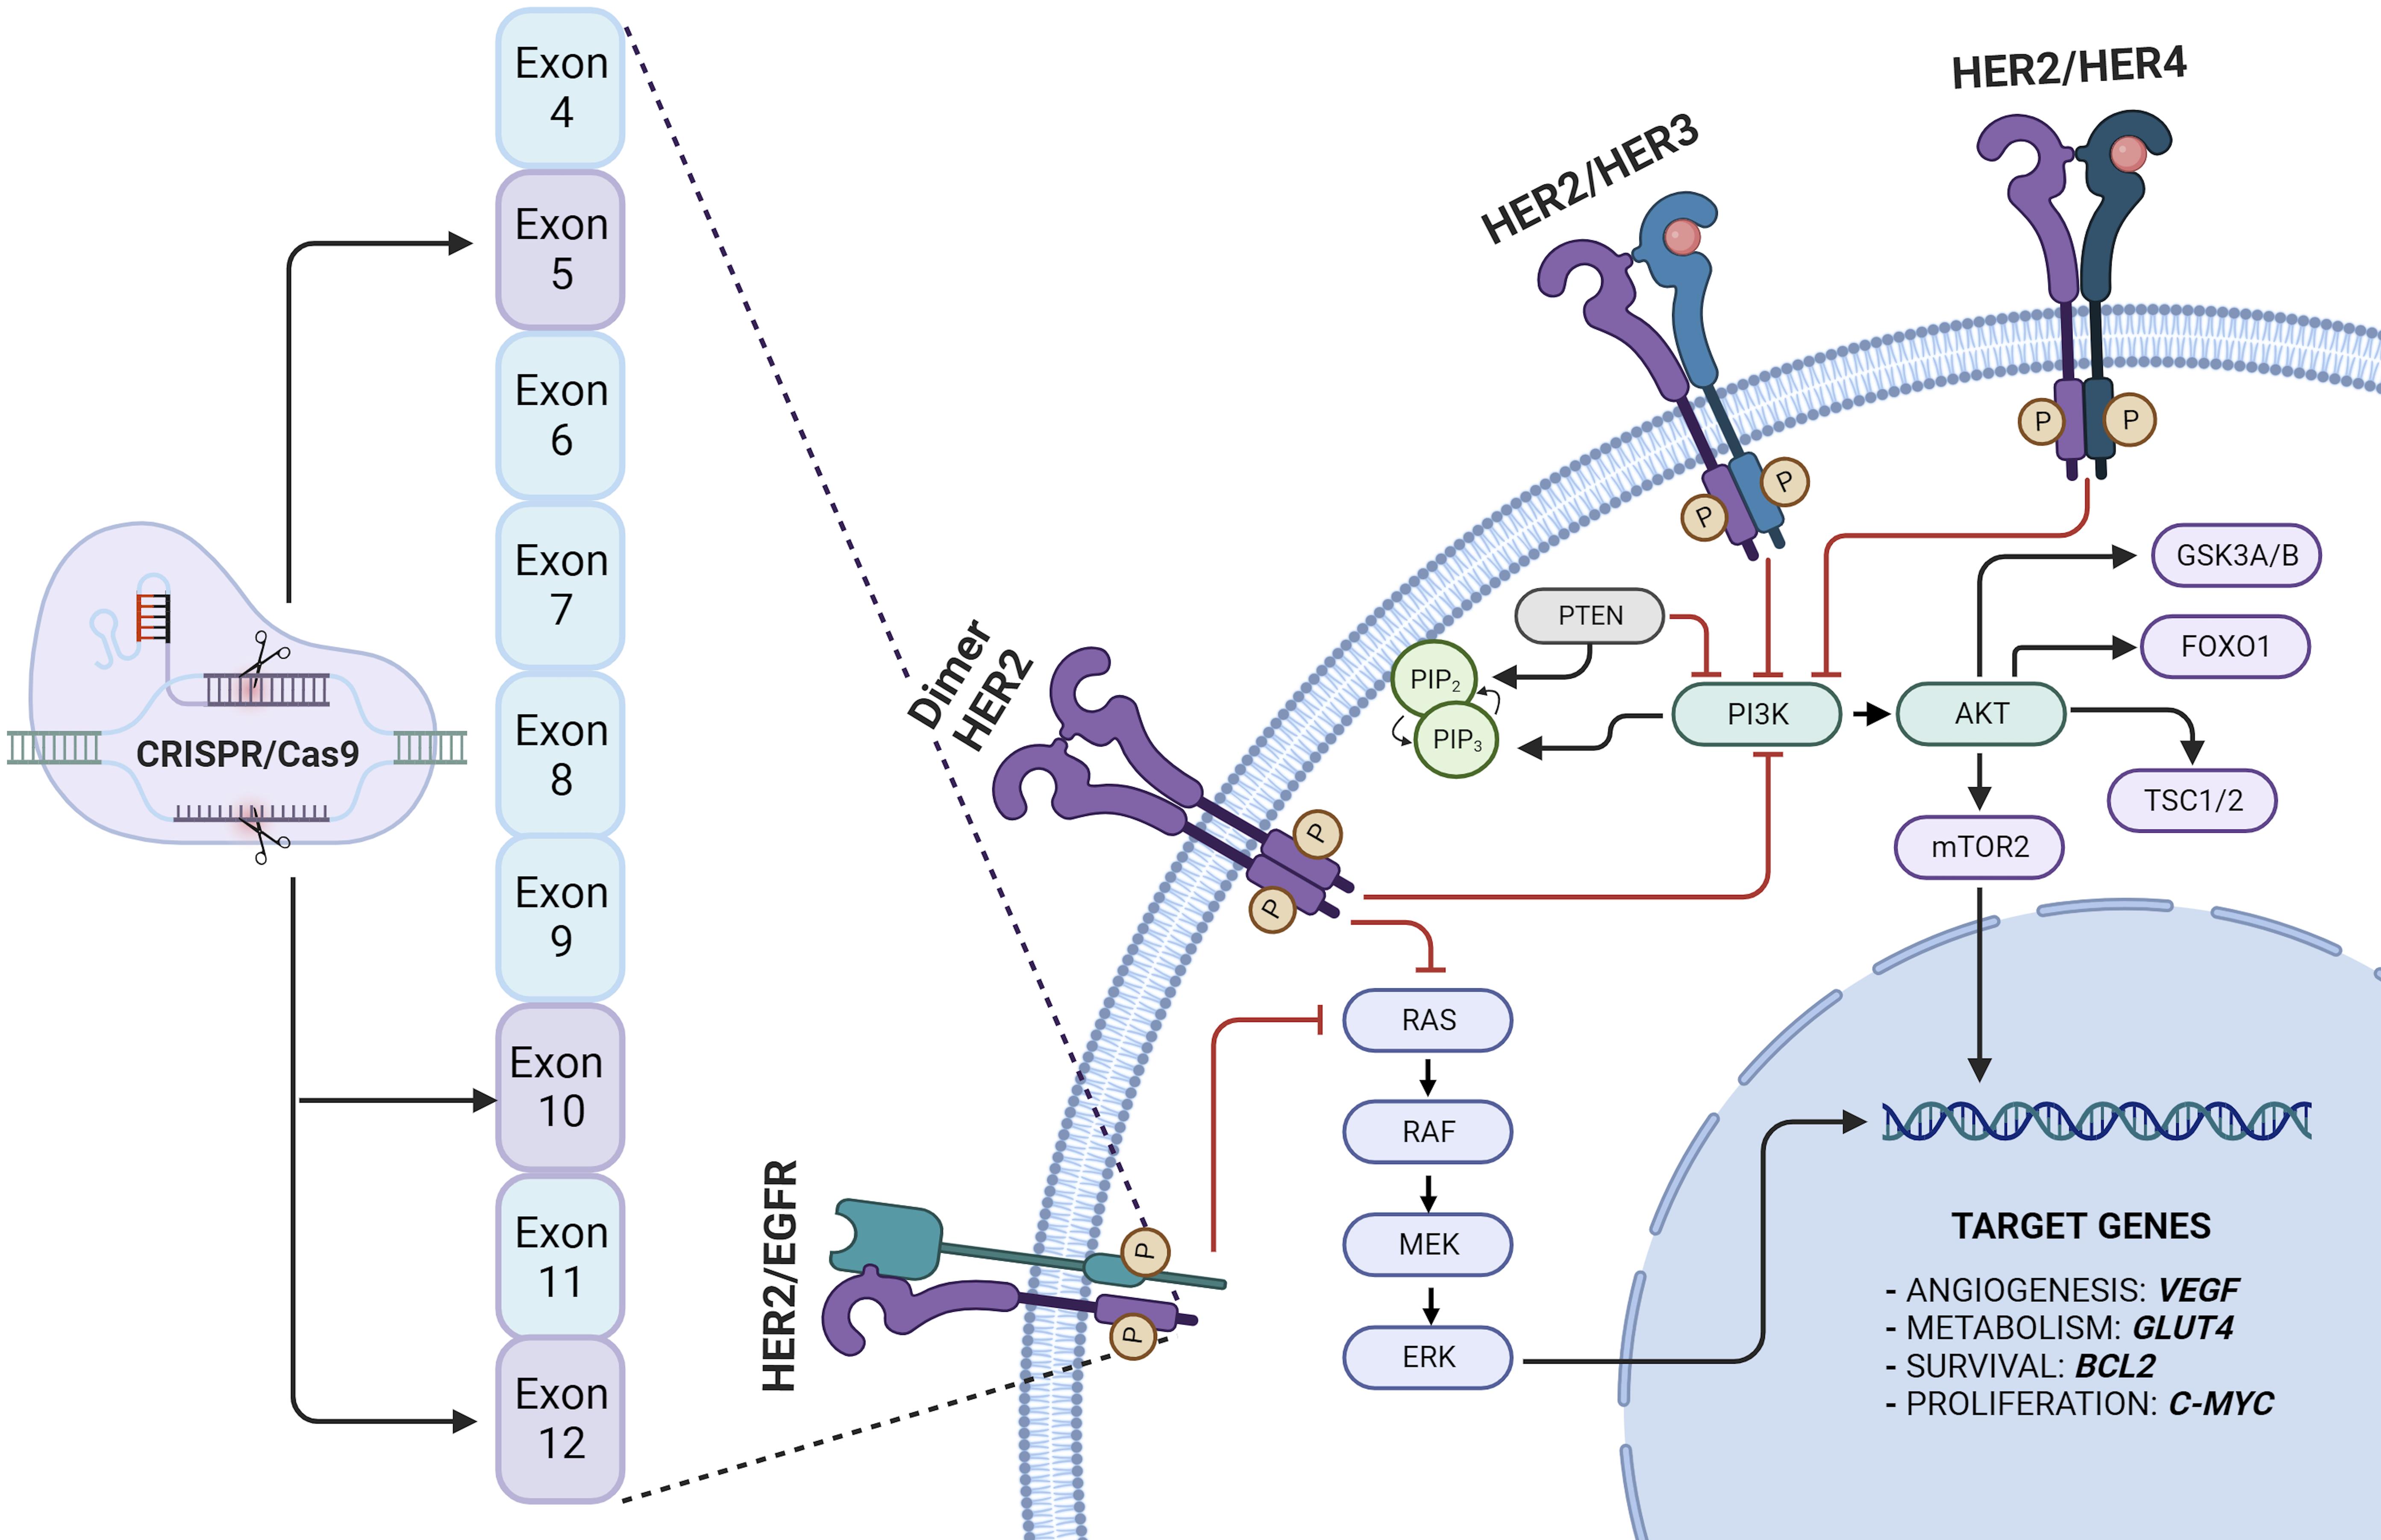 CRISPR/Cas9 as a gene editing tool in HER2+ Breast Cancer.